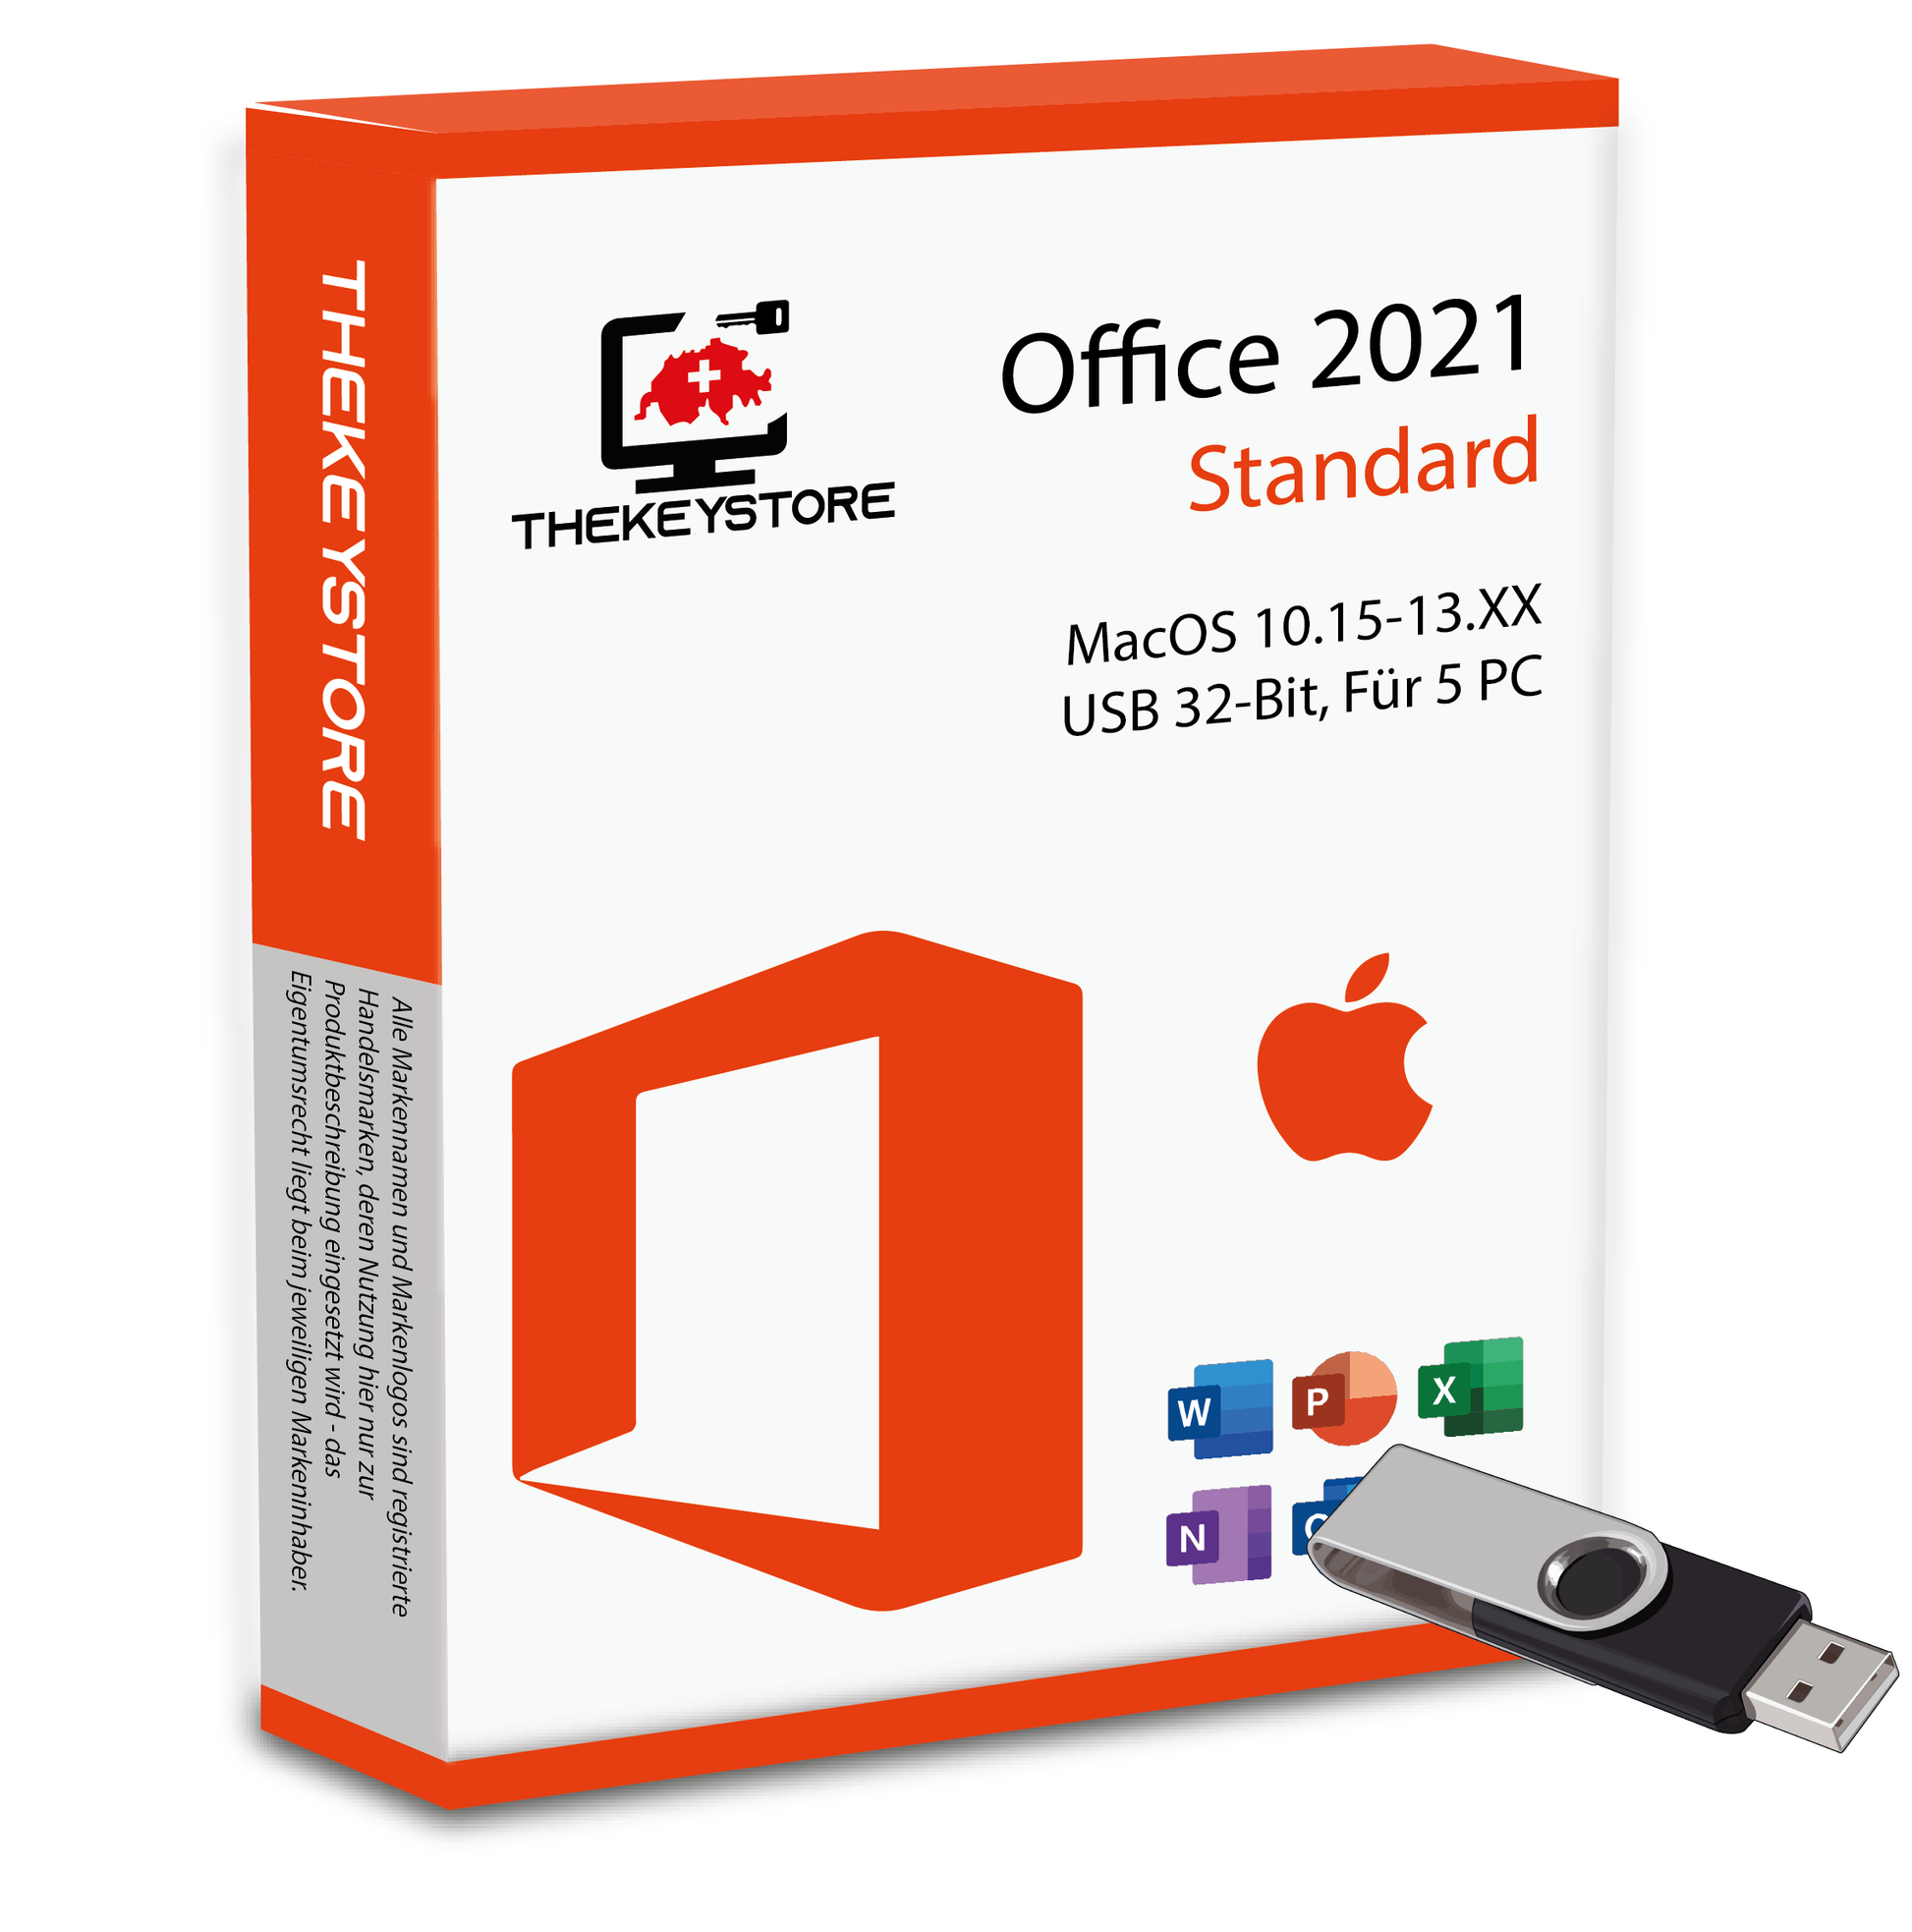 Microsoft Office 2021 Standard MacOS 10.15-13.XX - Für 5 PC - TheKeyStore Schweiz